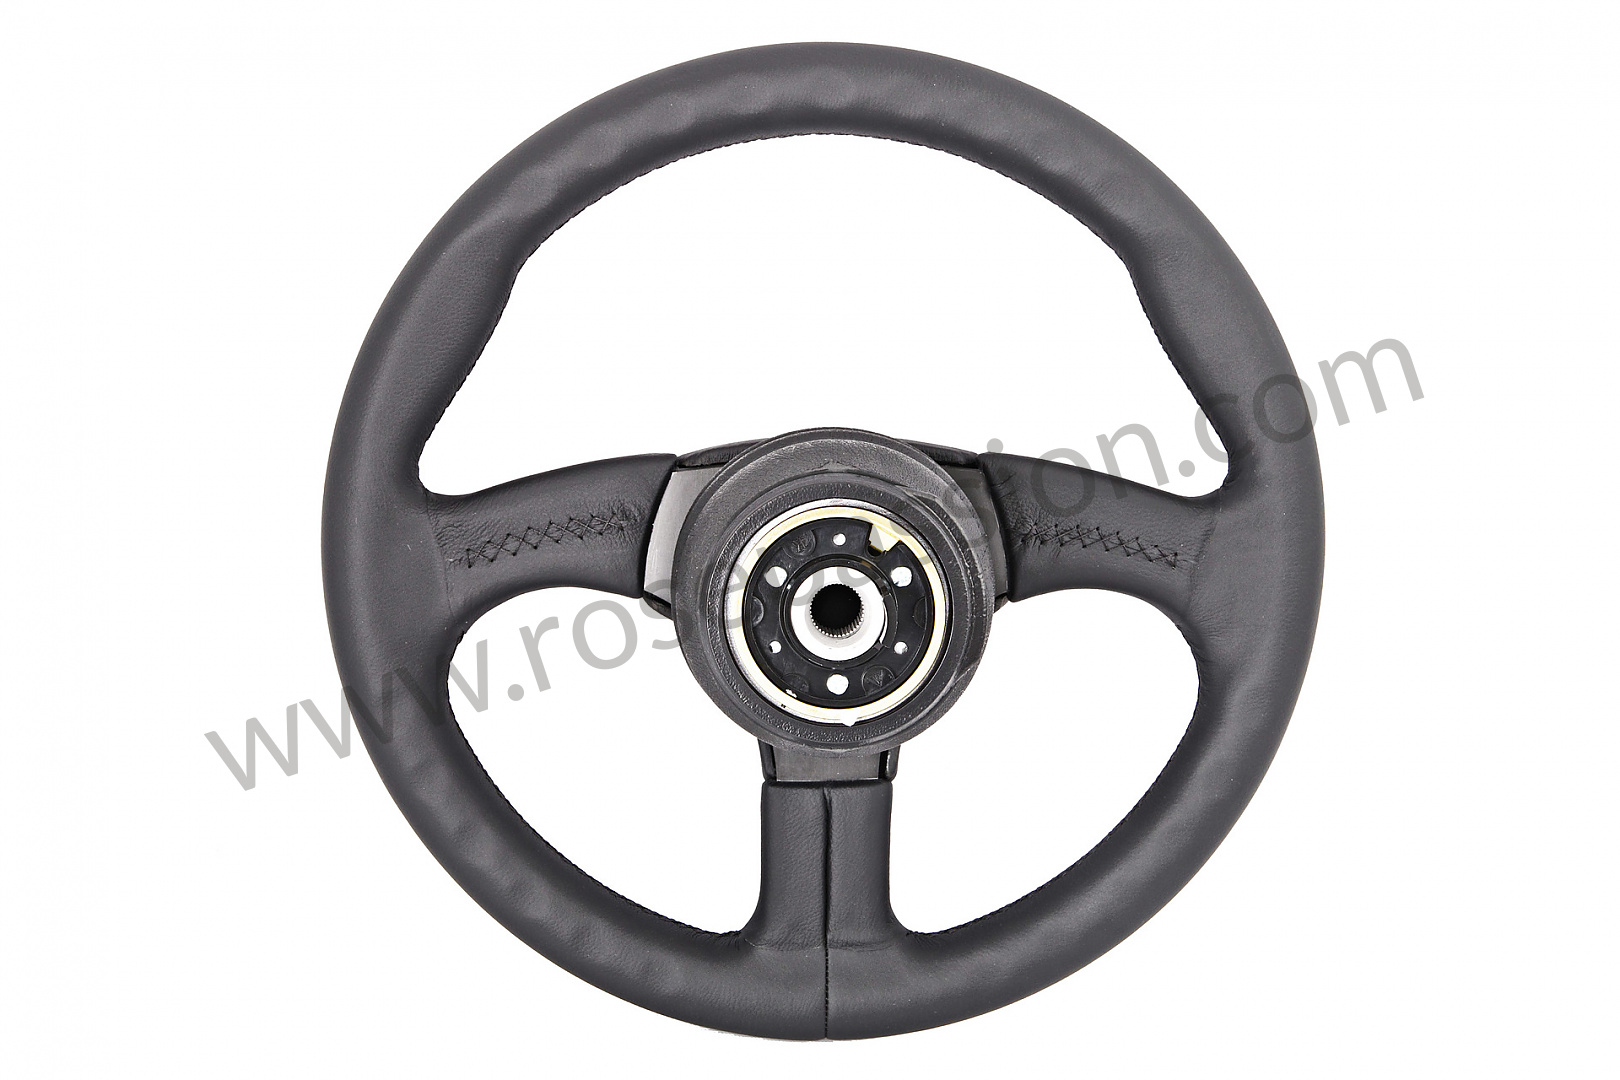 P yr Sports Steering Wheel クラブスポーツ ブラック ブラック 8yr レザー aj Xxxに対応 Porsche